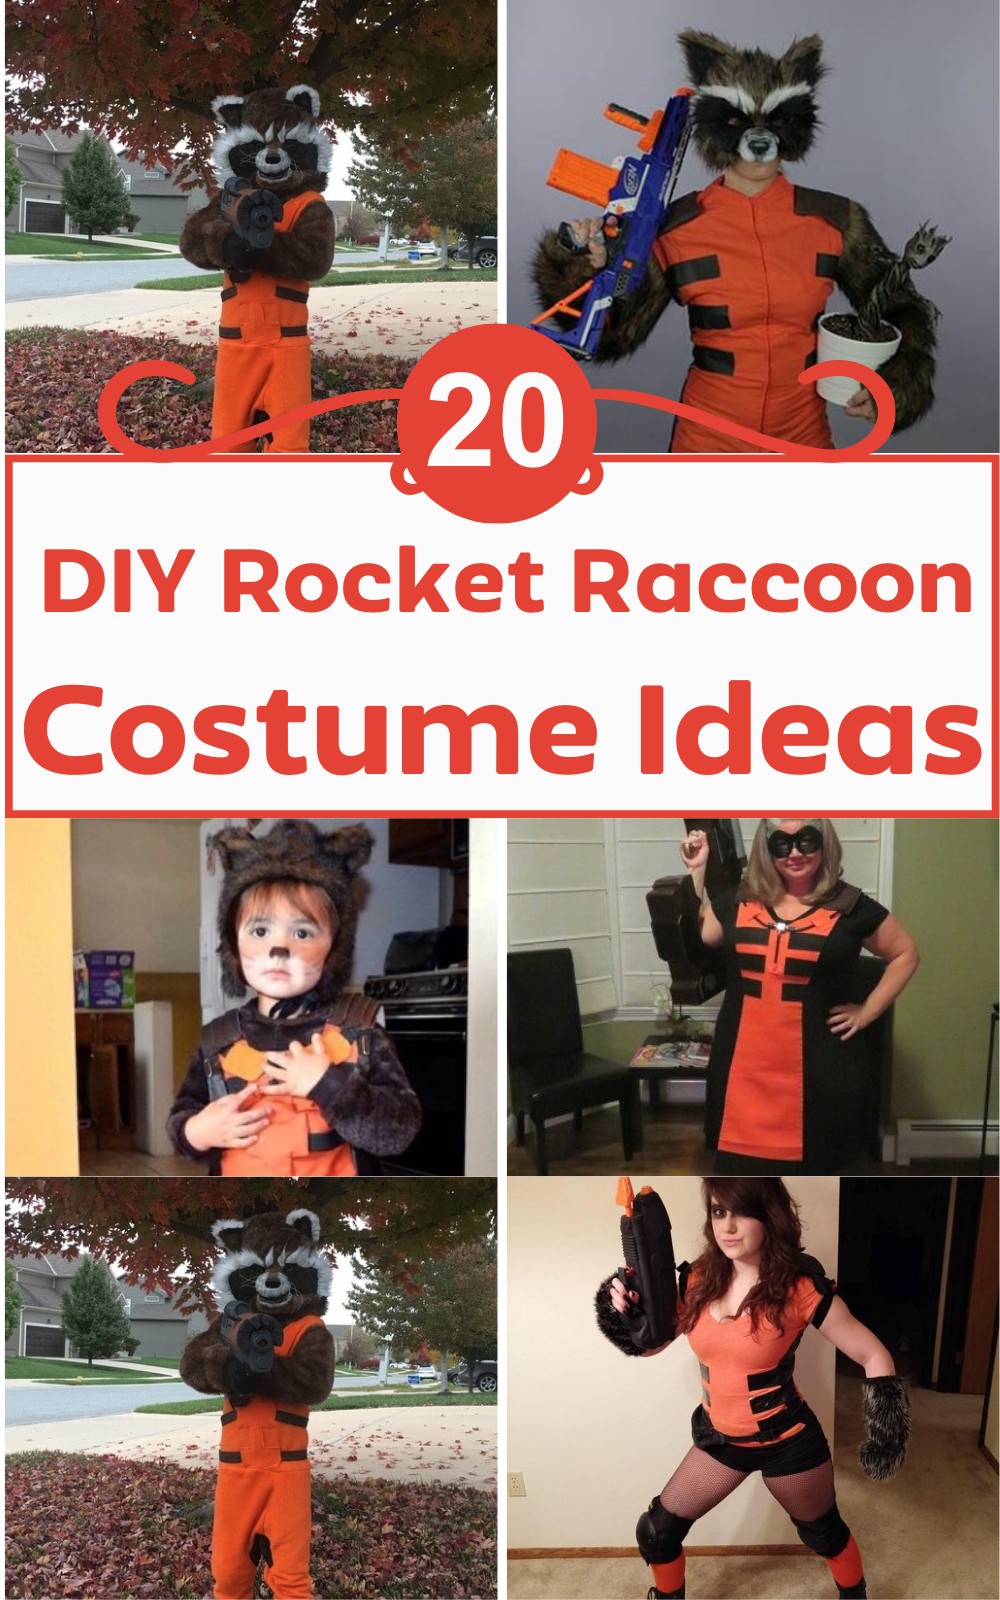 20 DIY Rocket Raccoon Costume ideas